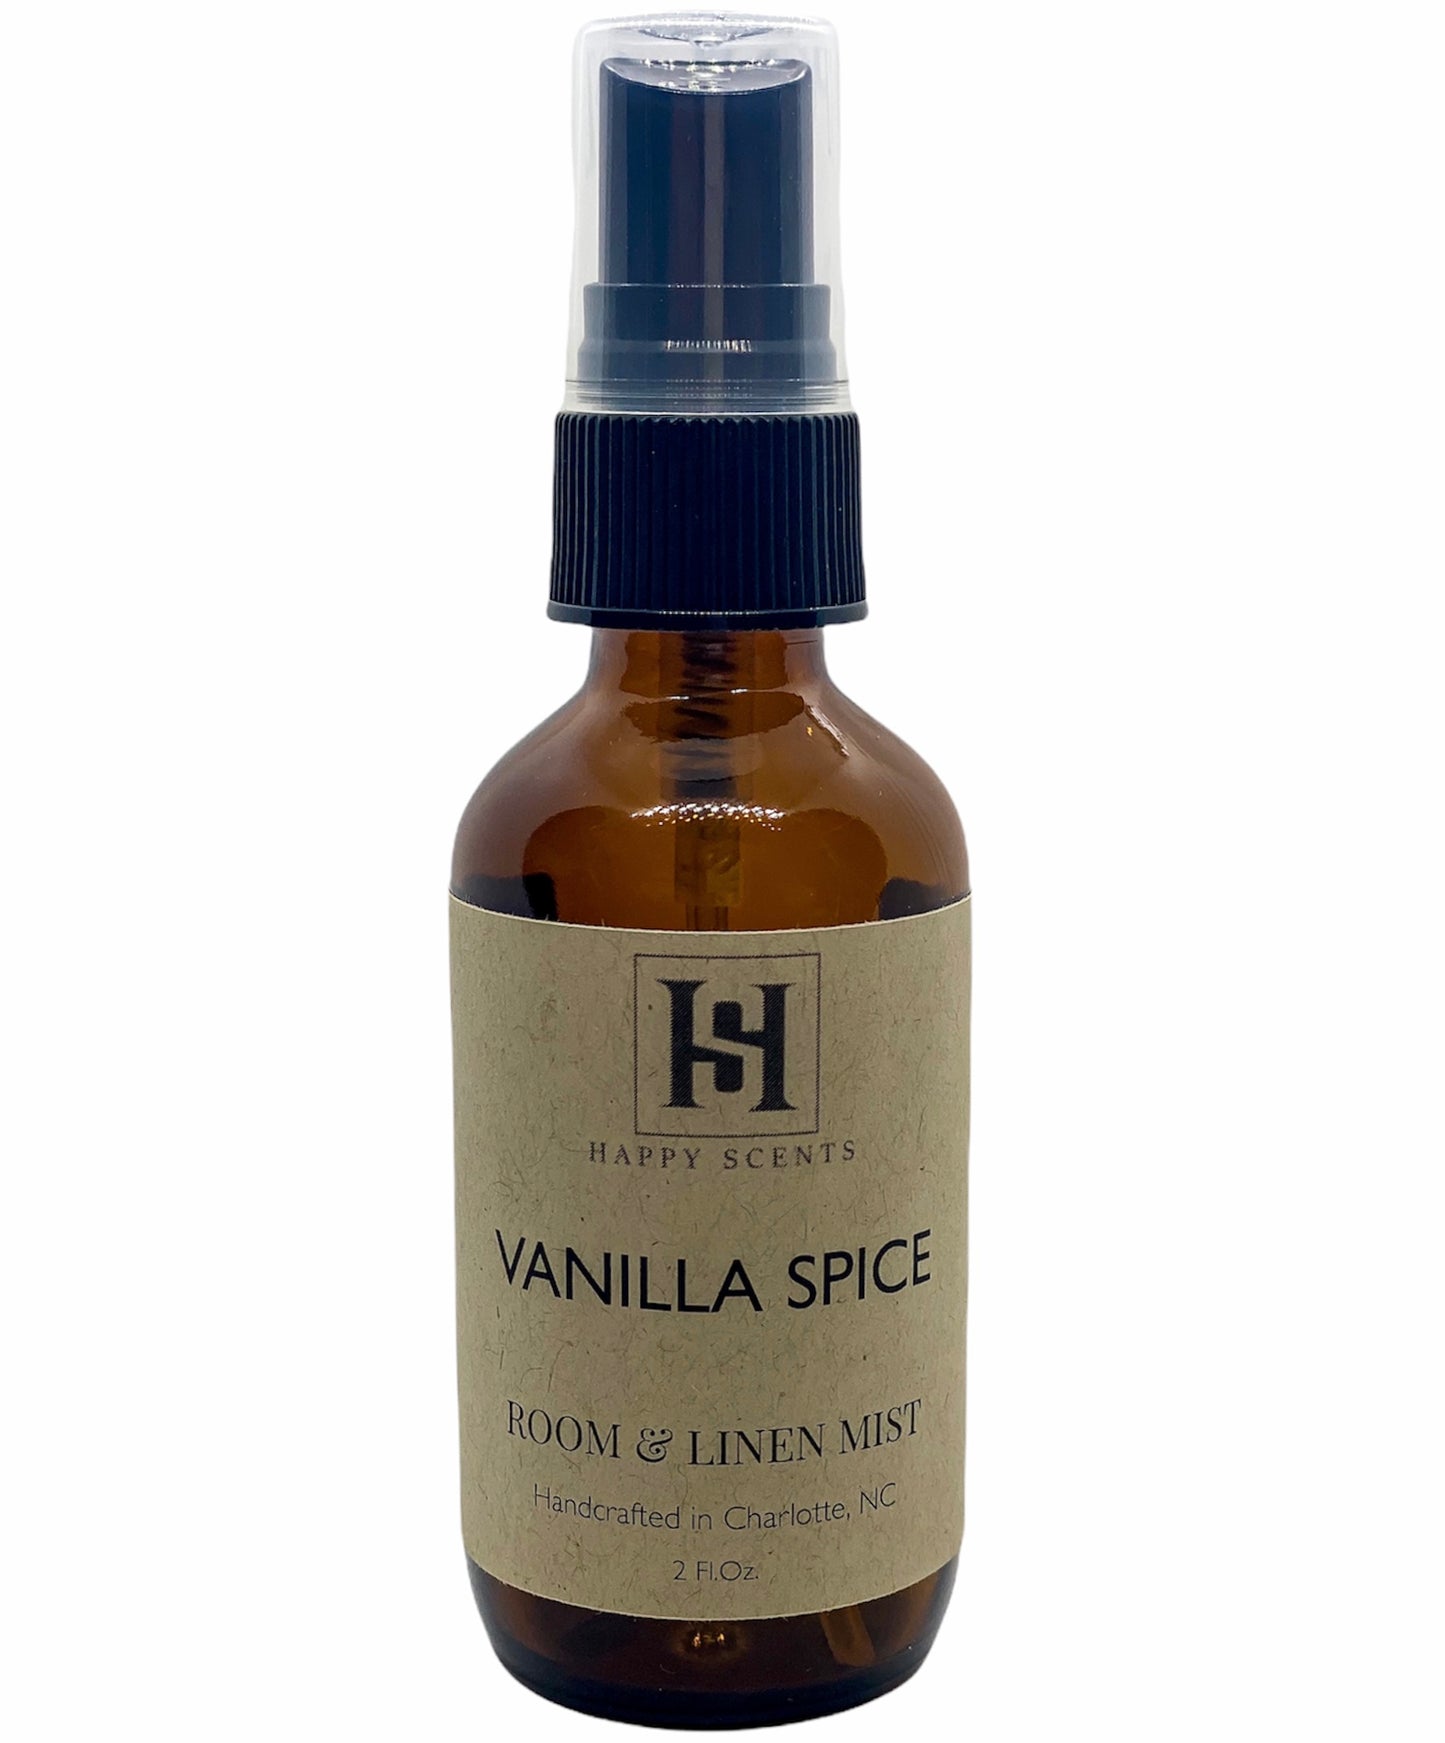 Vanilla Spice Room & Linen Mist